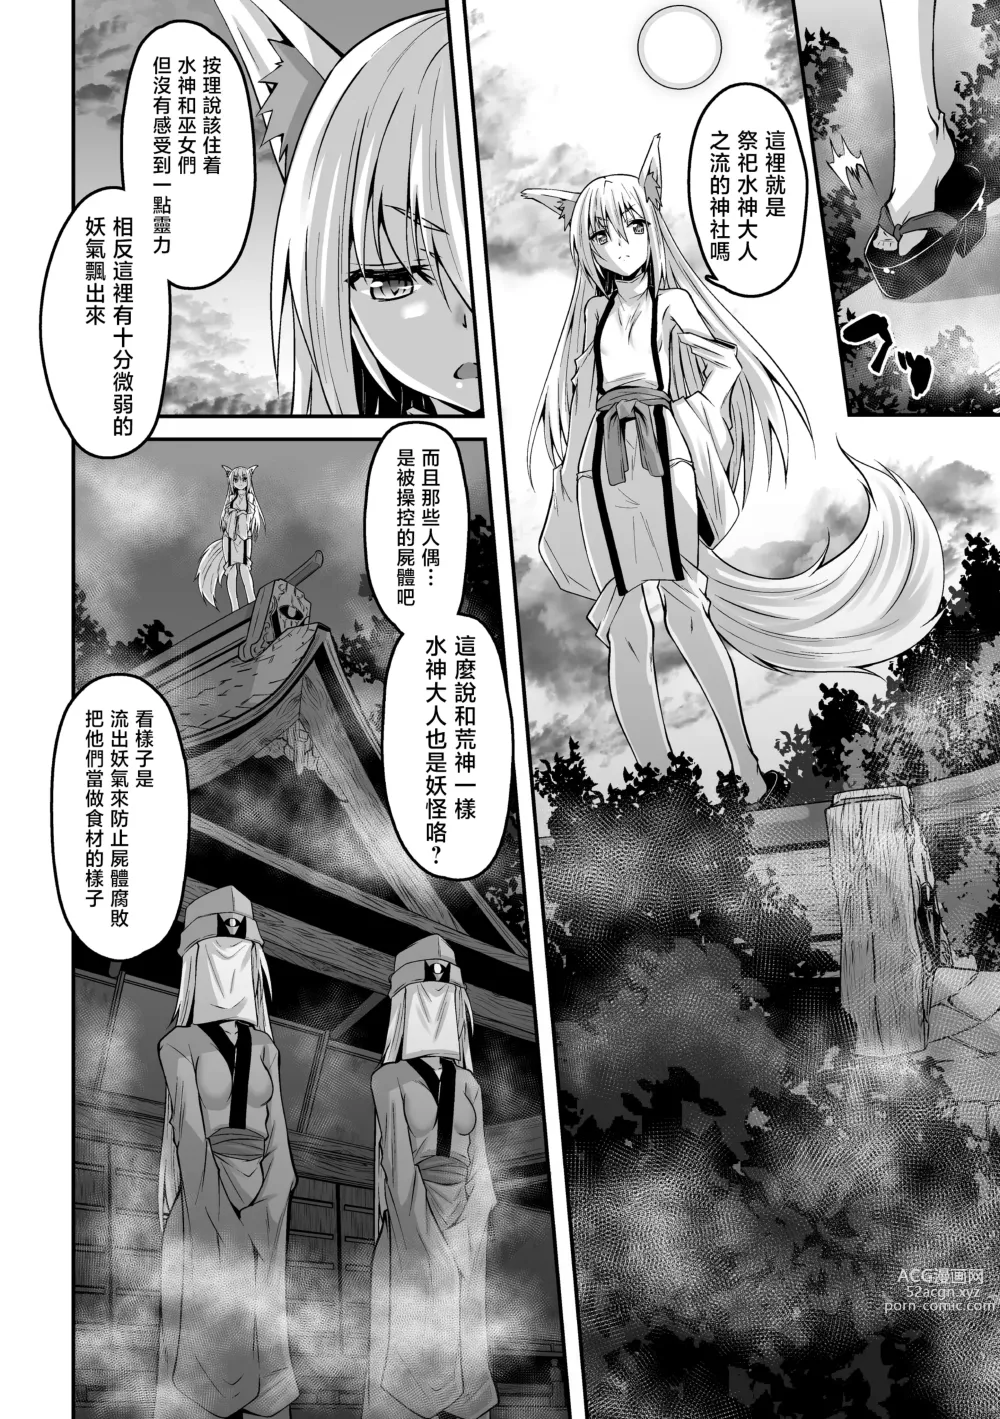 Page 5 of manga Youko Inmon Kitan 5